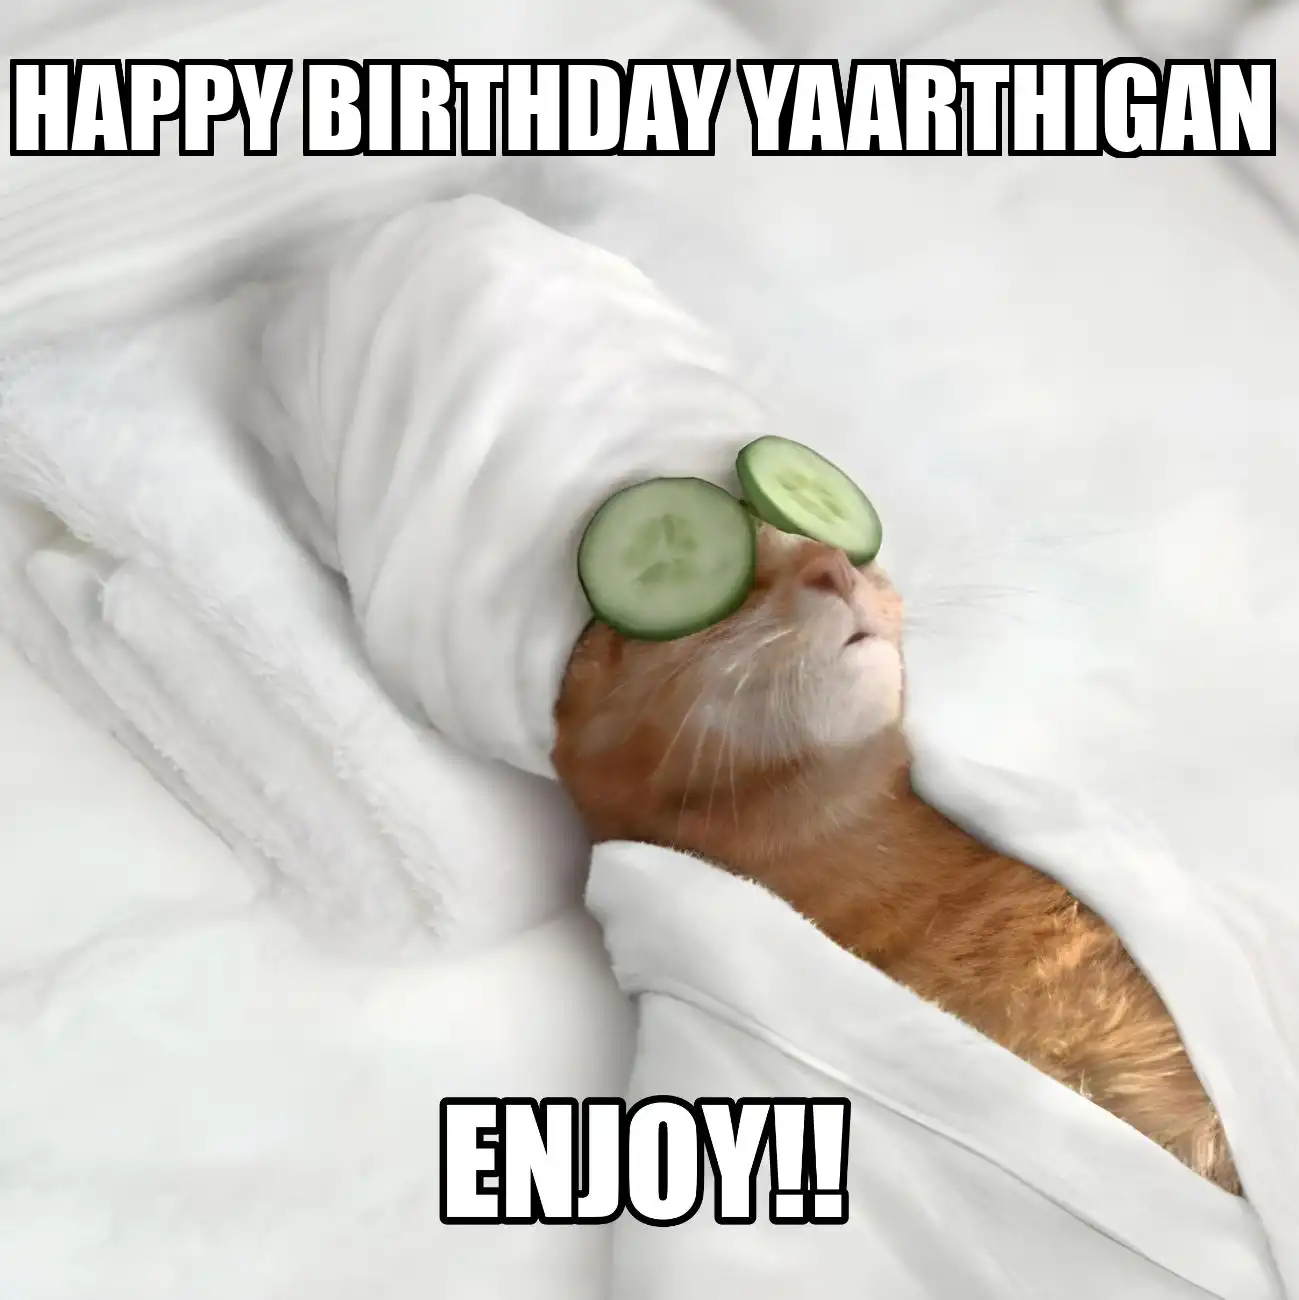 Happy Birthday Yaarthigan Enjoy Cat Meme